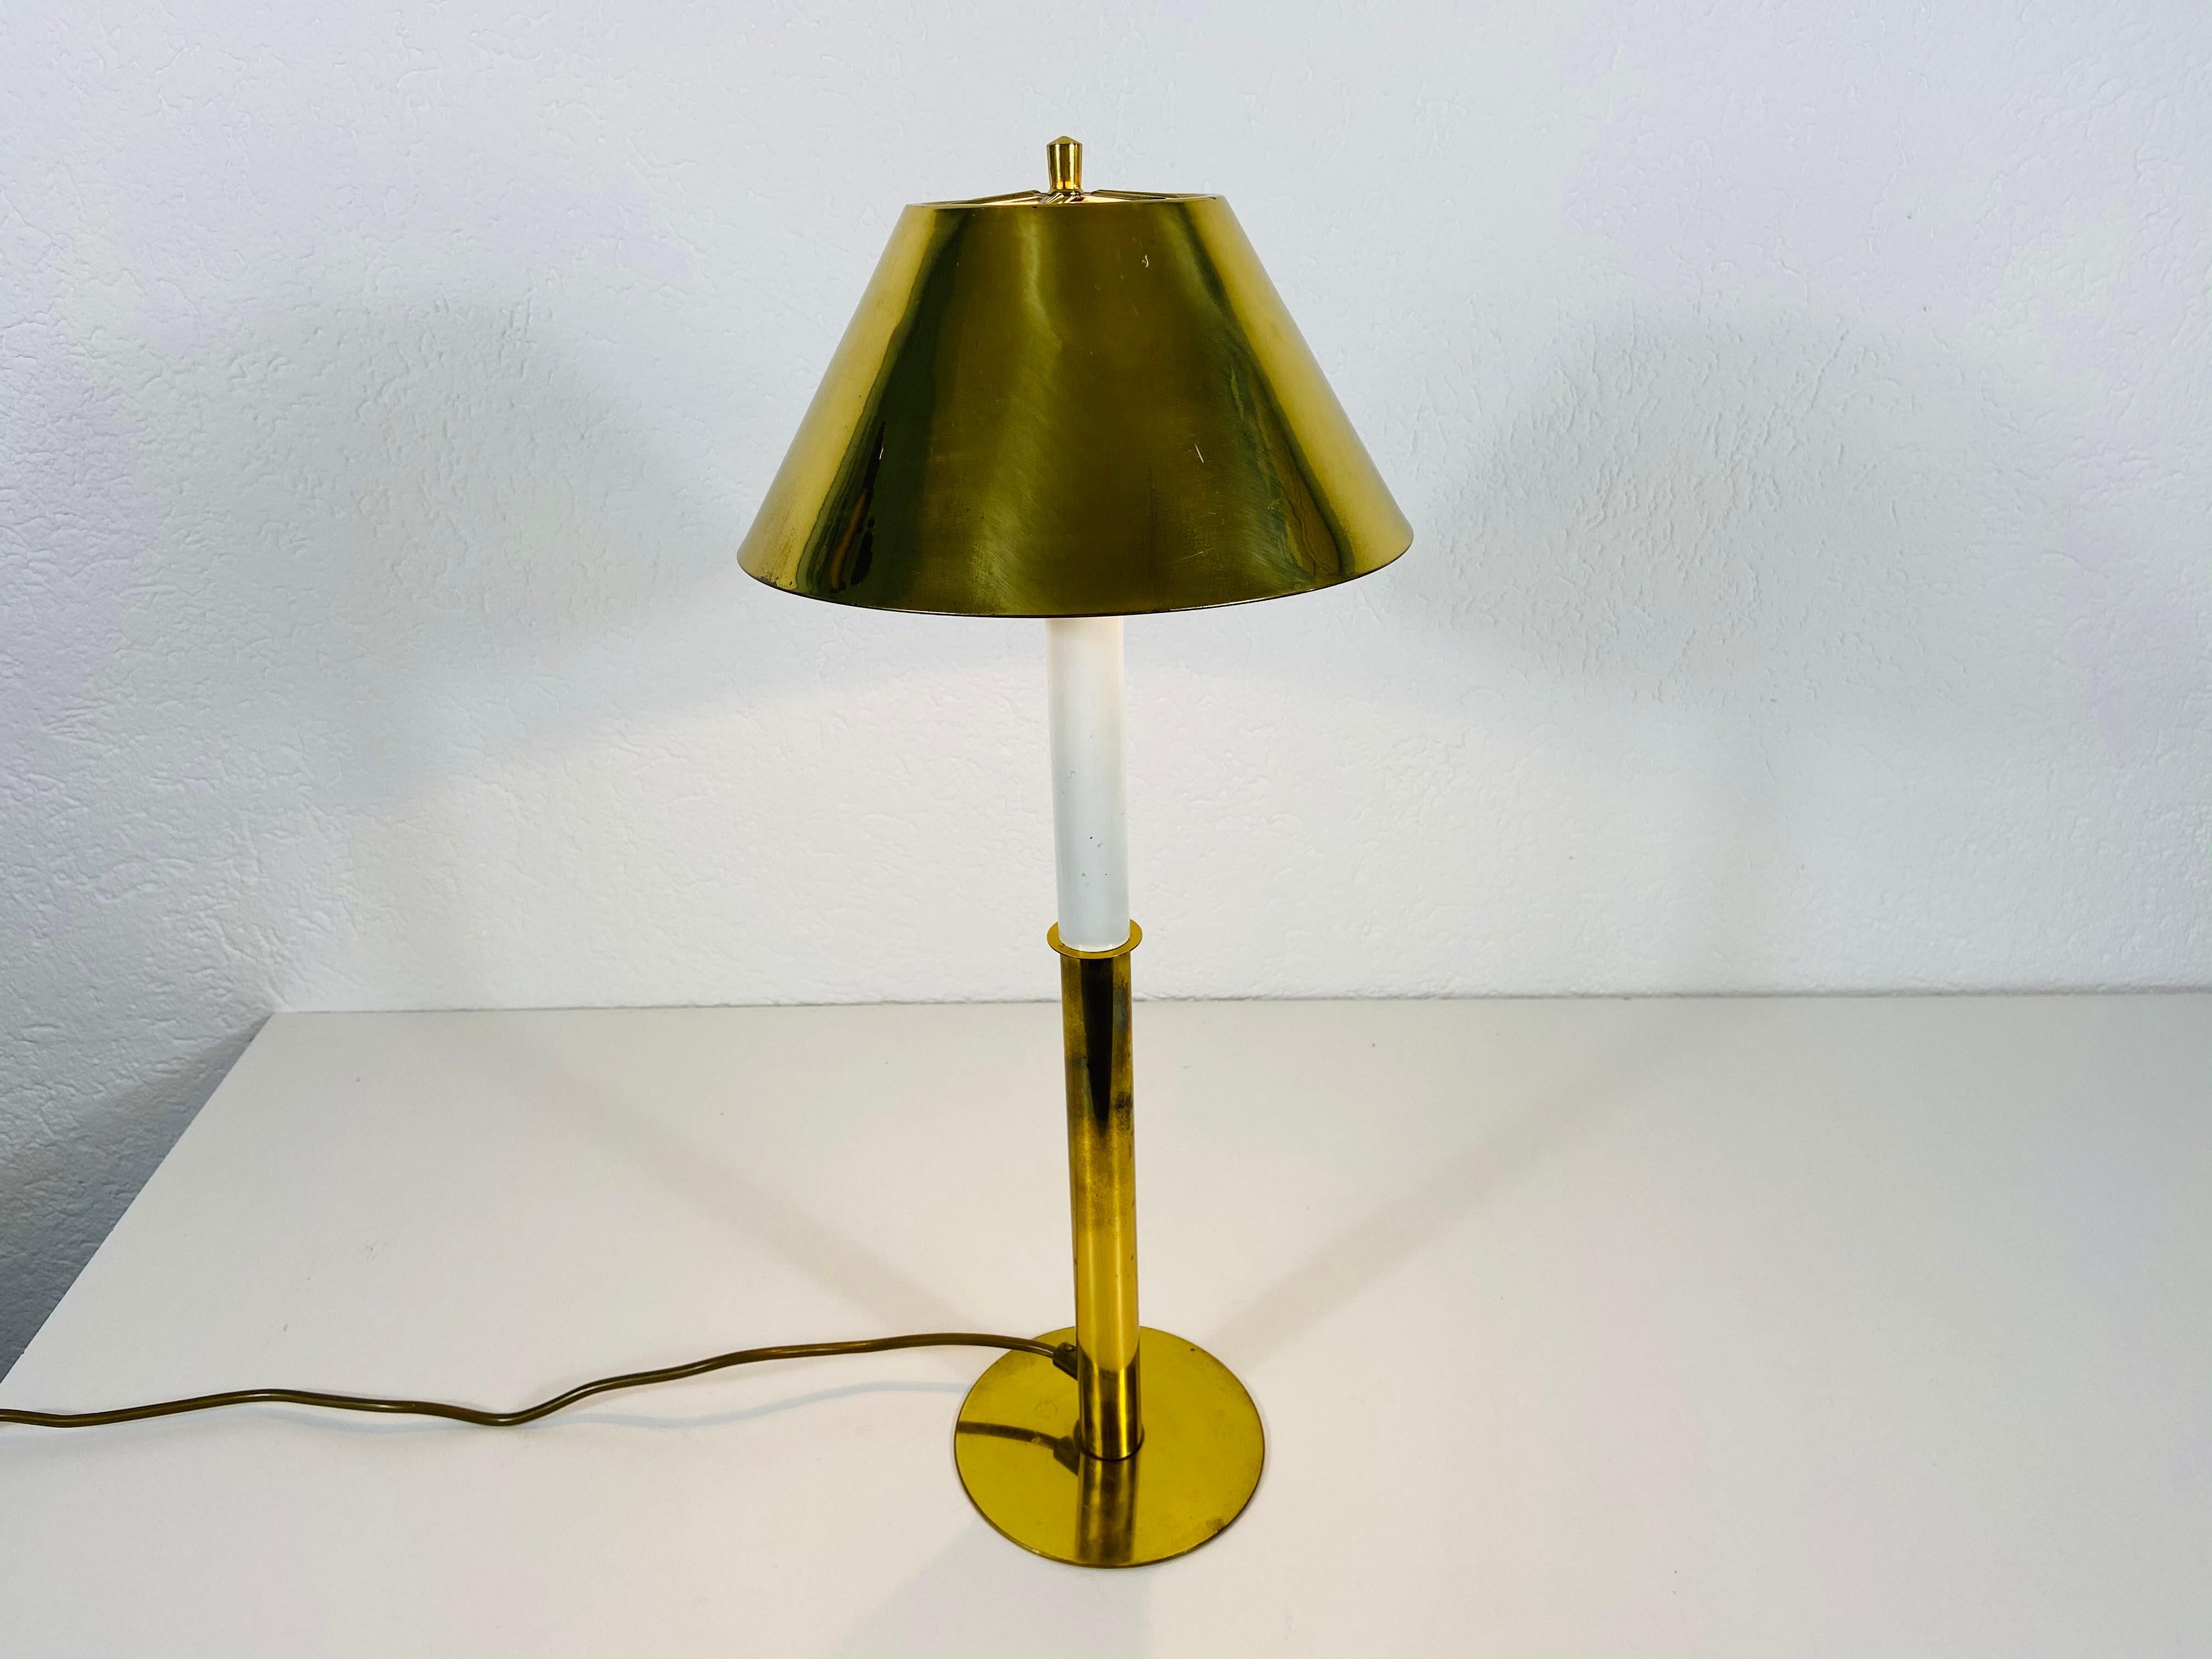 German Midcentury Solid Brass Table Lamp by Vereinigte Werkstätte, 1960s For Sale 4